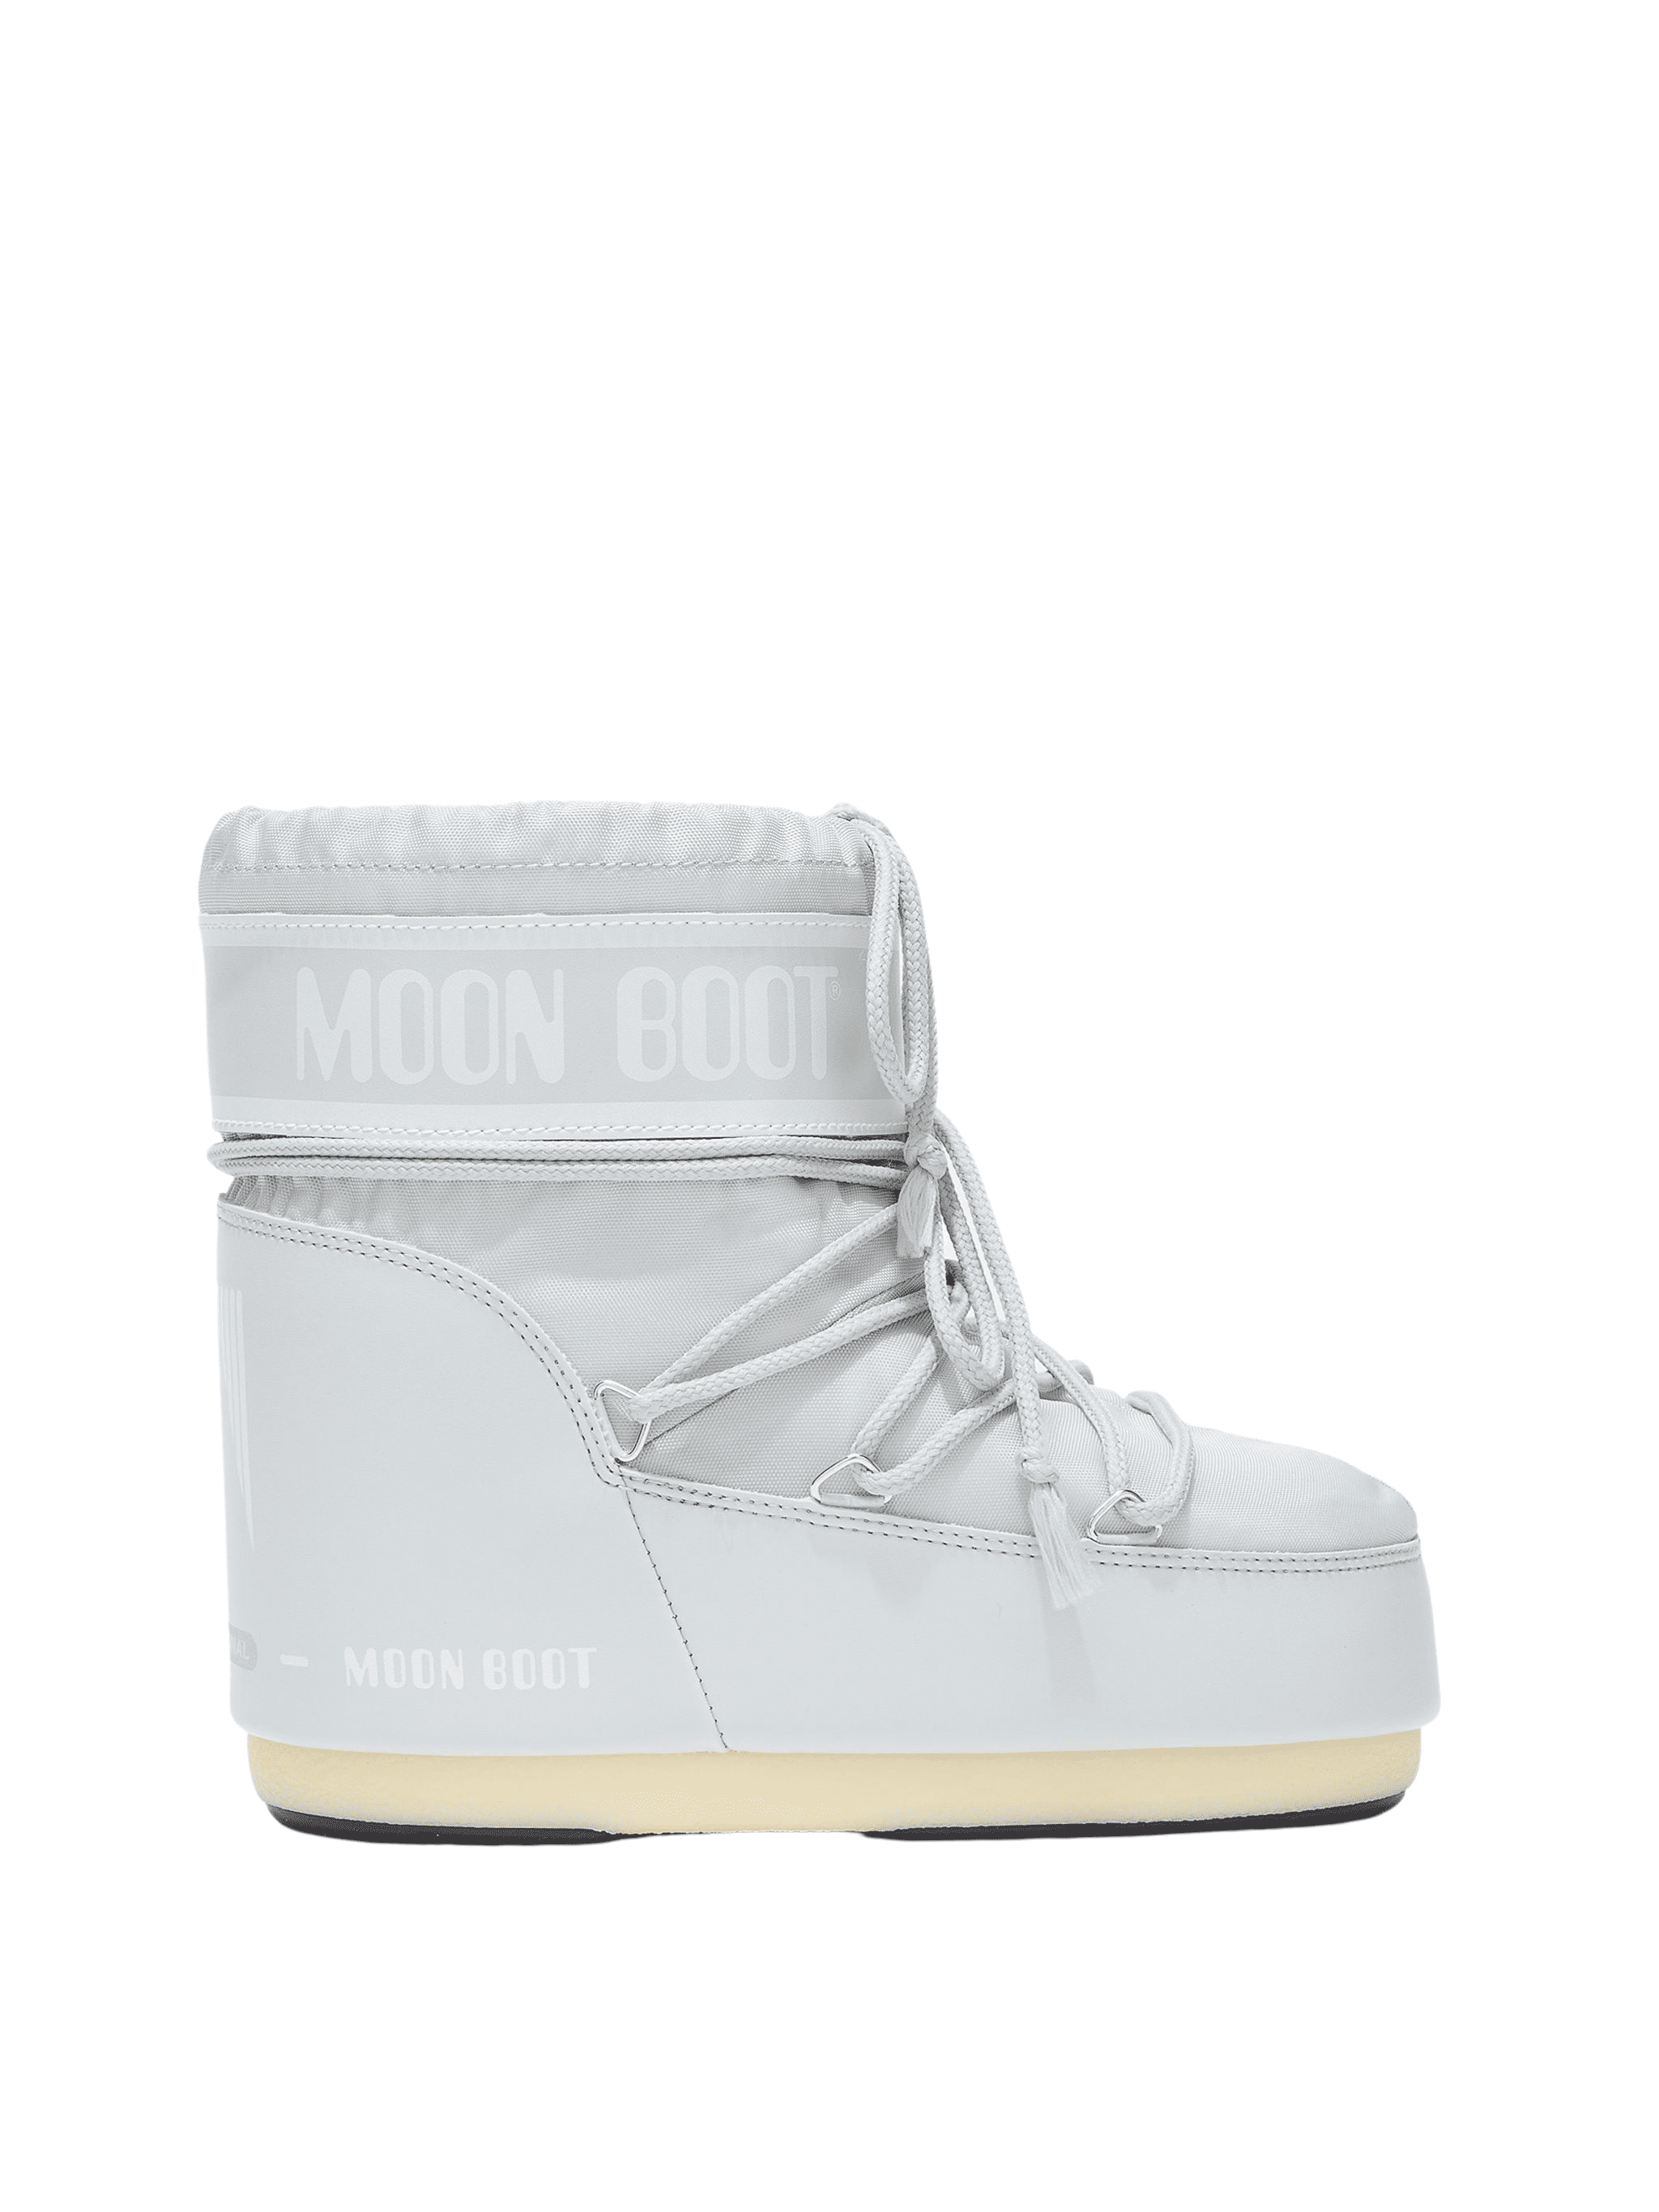 Moon Boot Icon Low Grey Nylon Boots 14093400 012